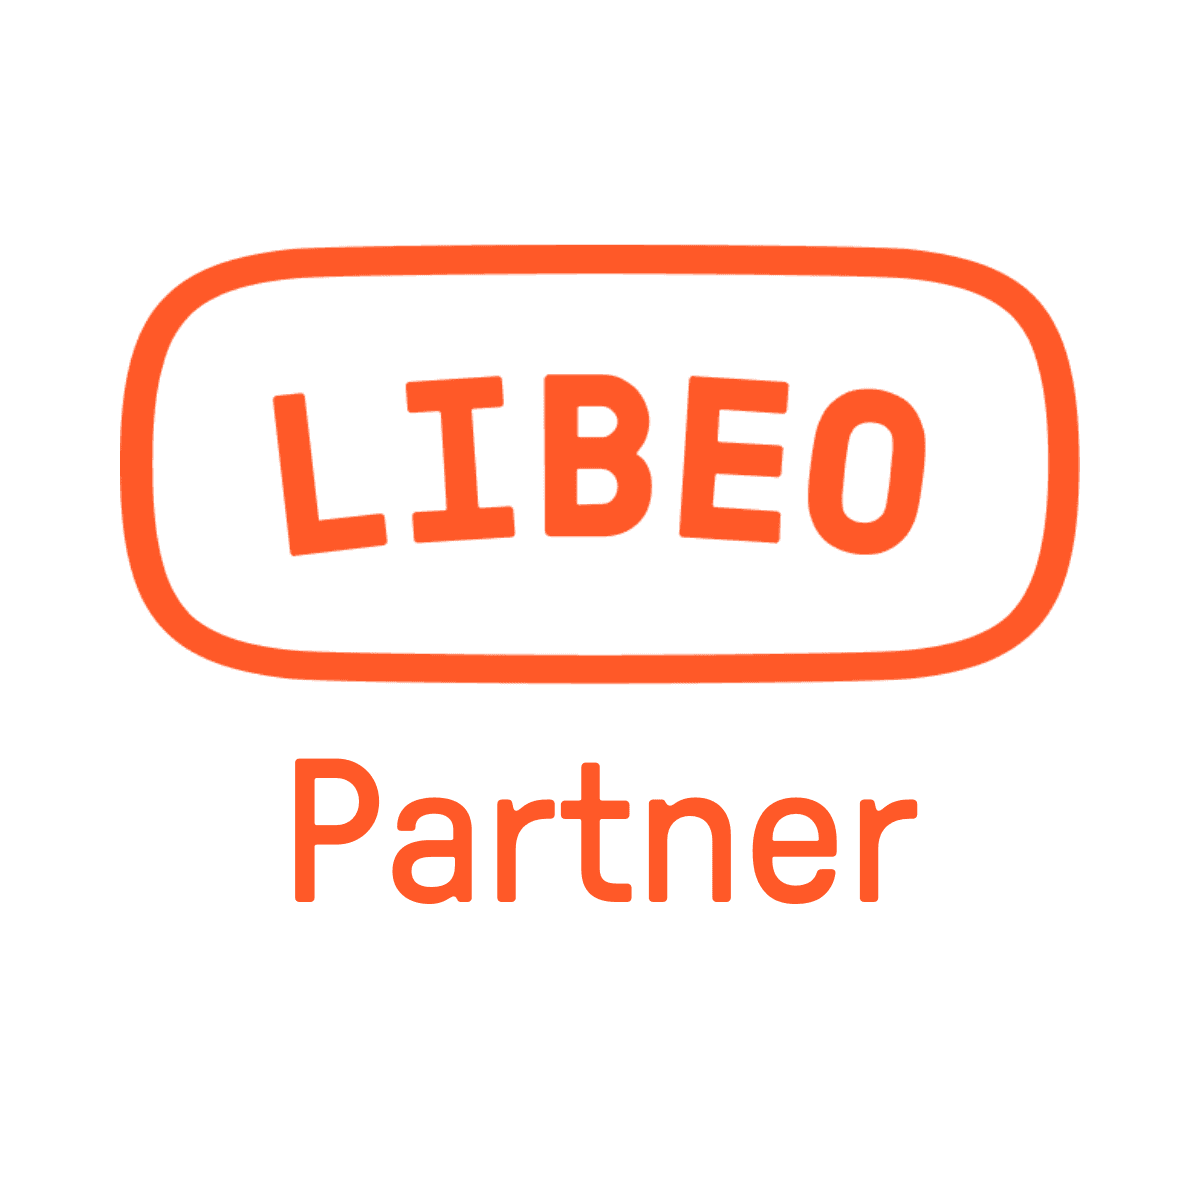 Libeo-partner-logo-orange